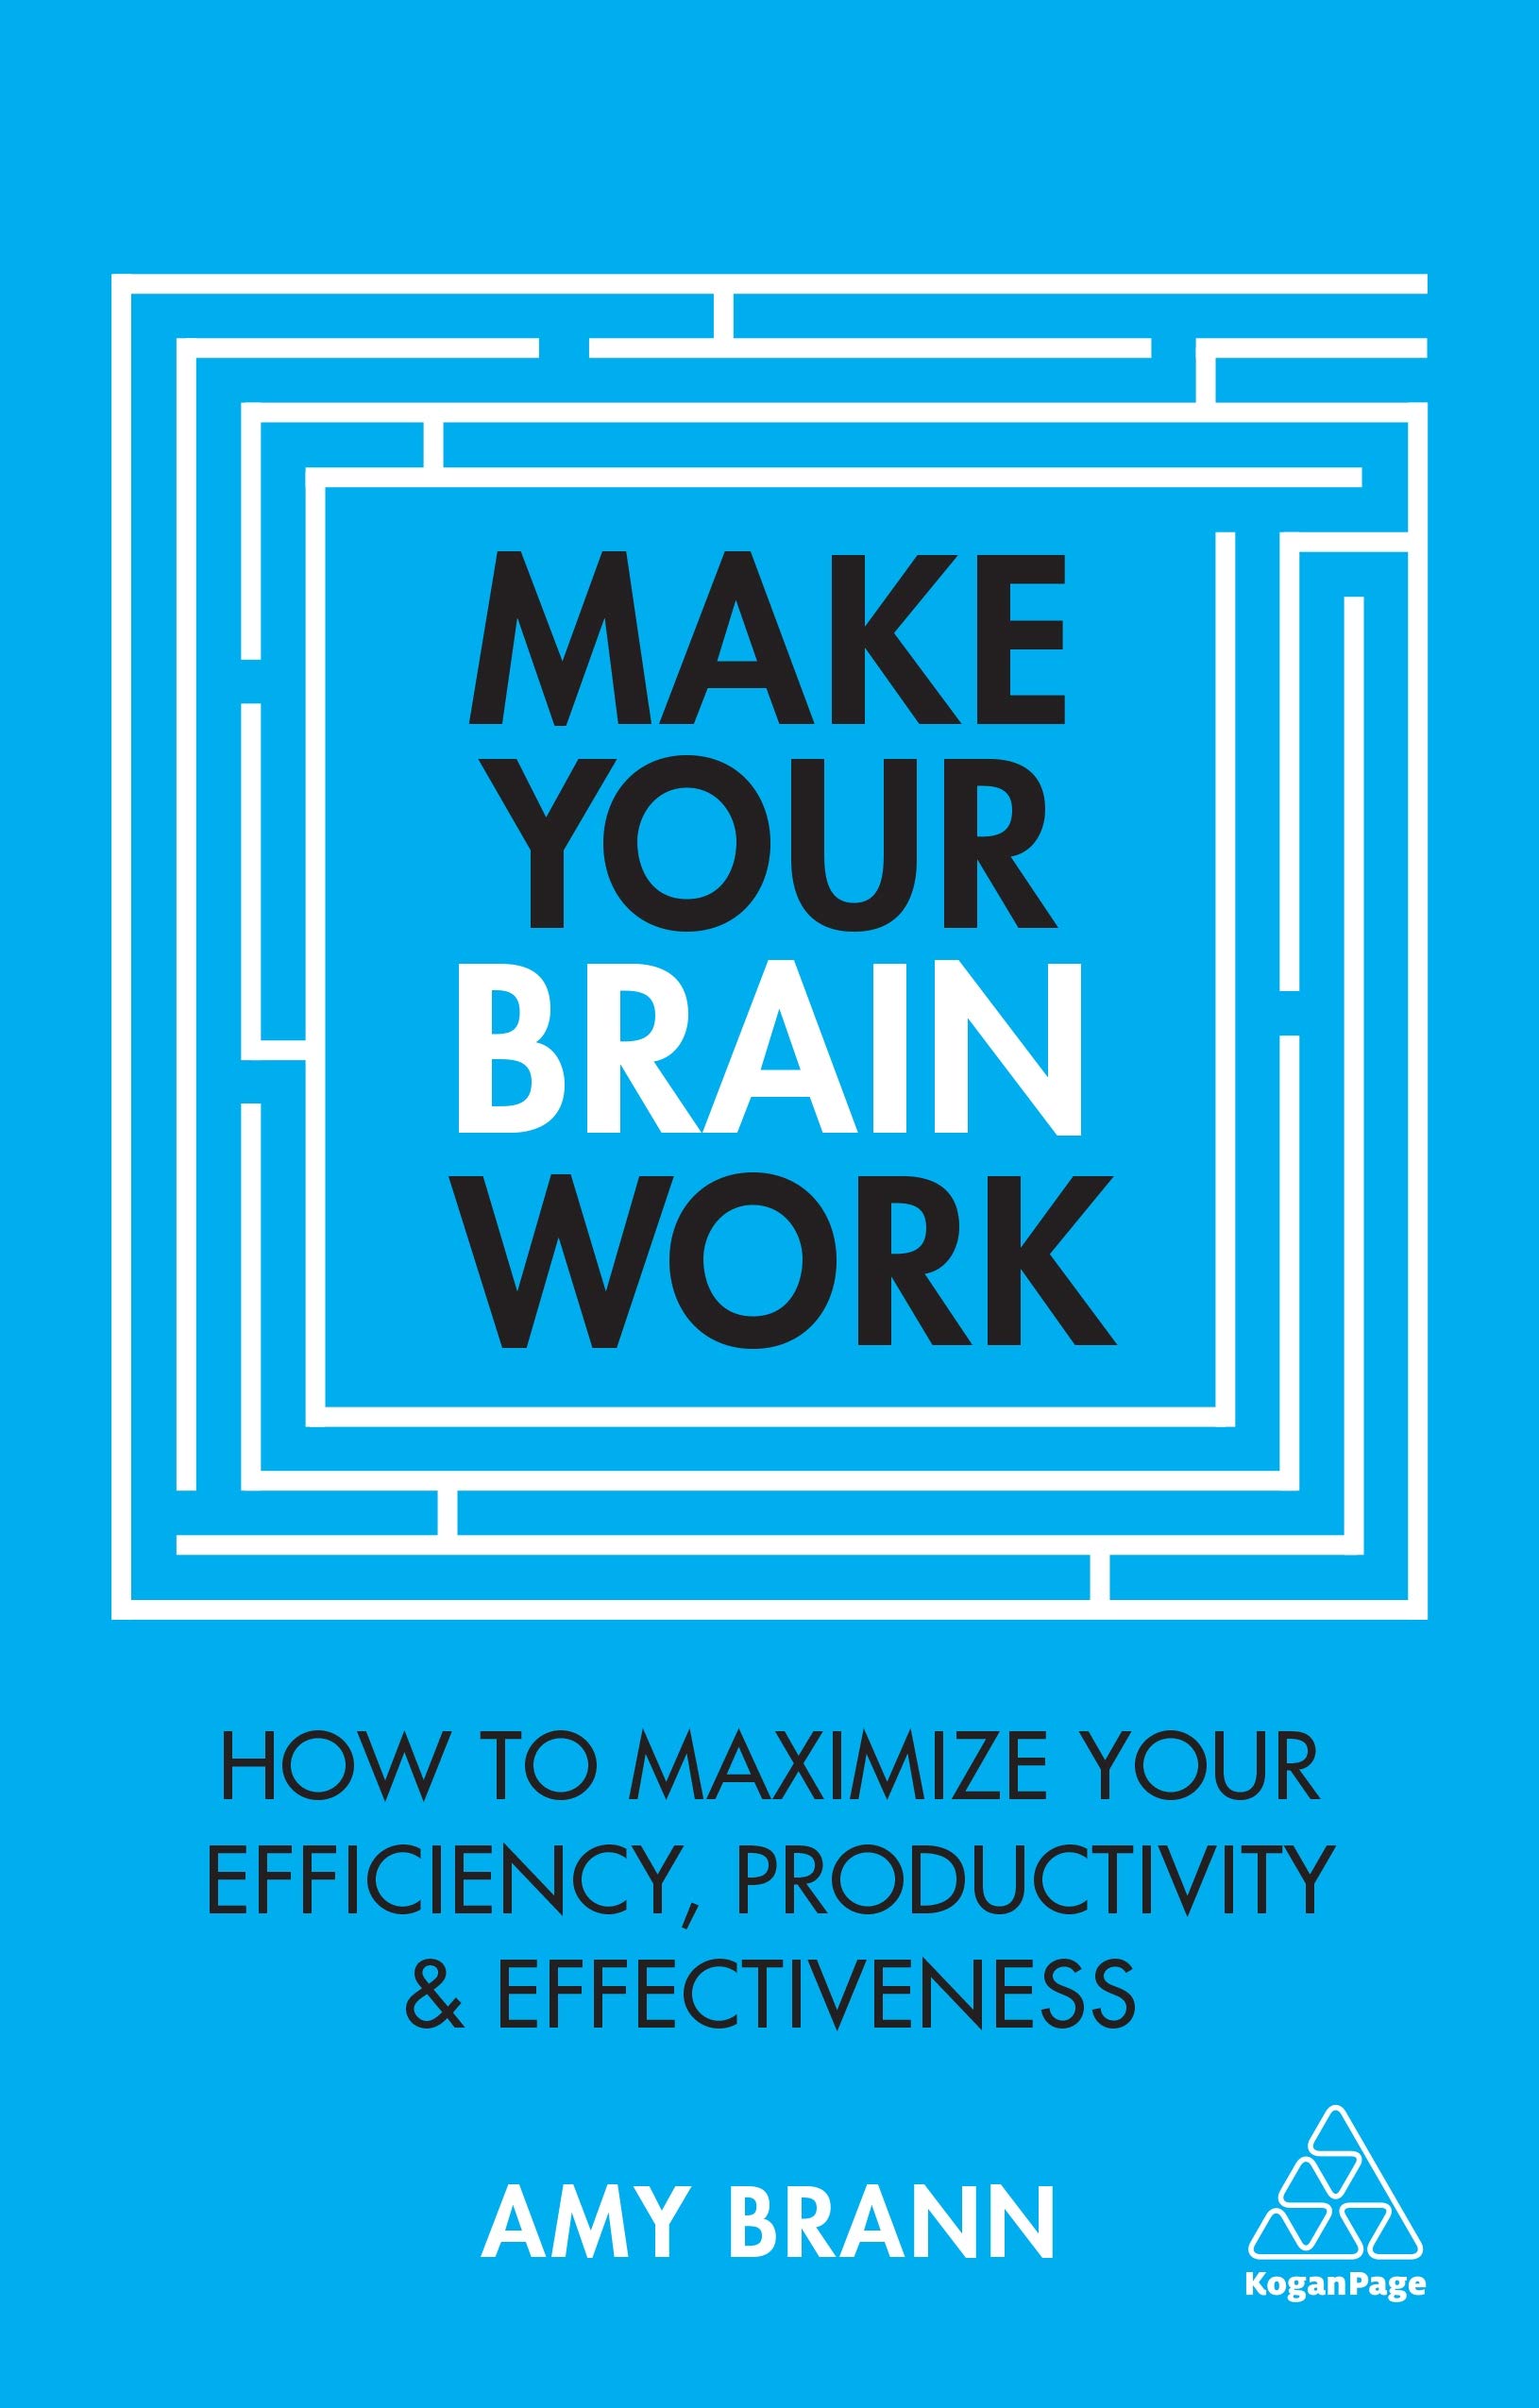 Make Your Brain Work